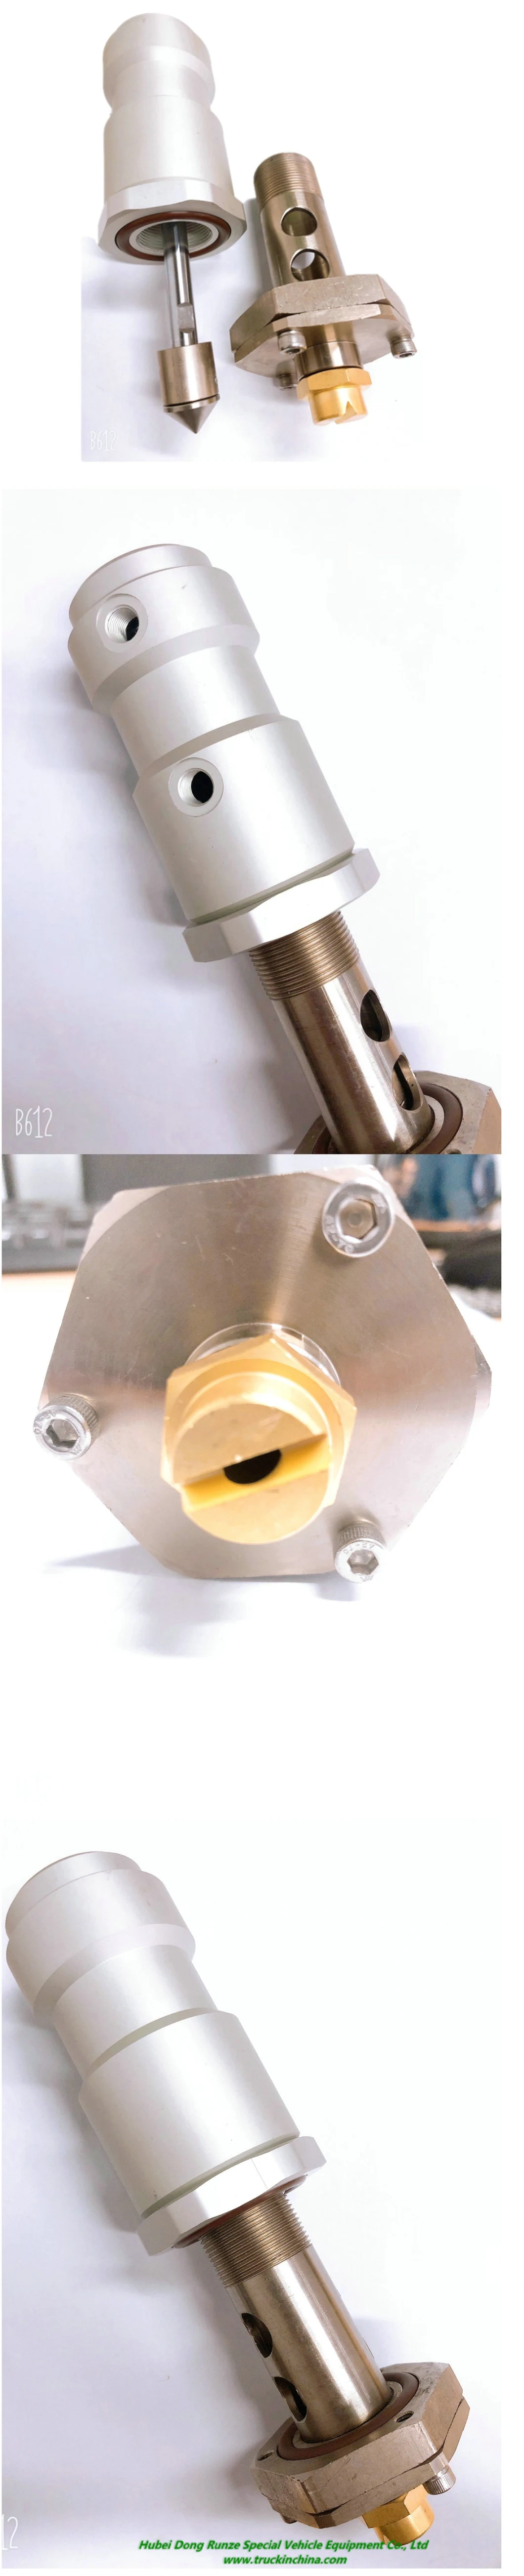 Asphalt Spray Pneumatic Cylinder Complete with Copper Asphalt Spray Nozzle